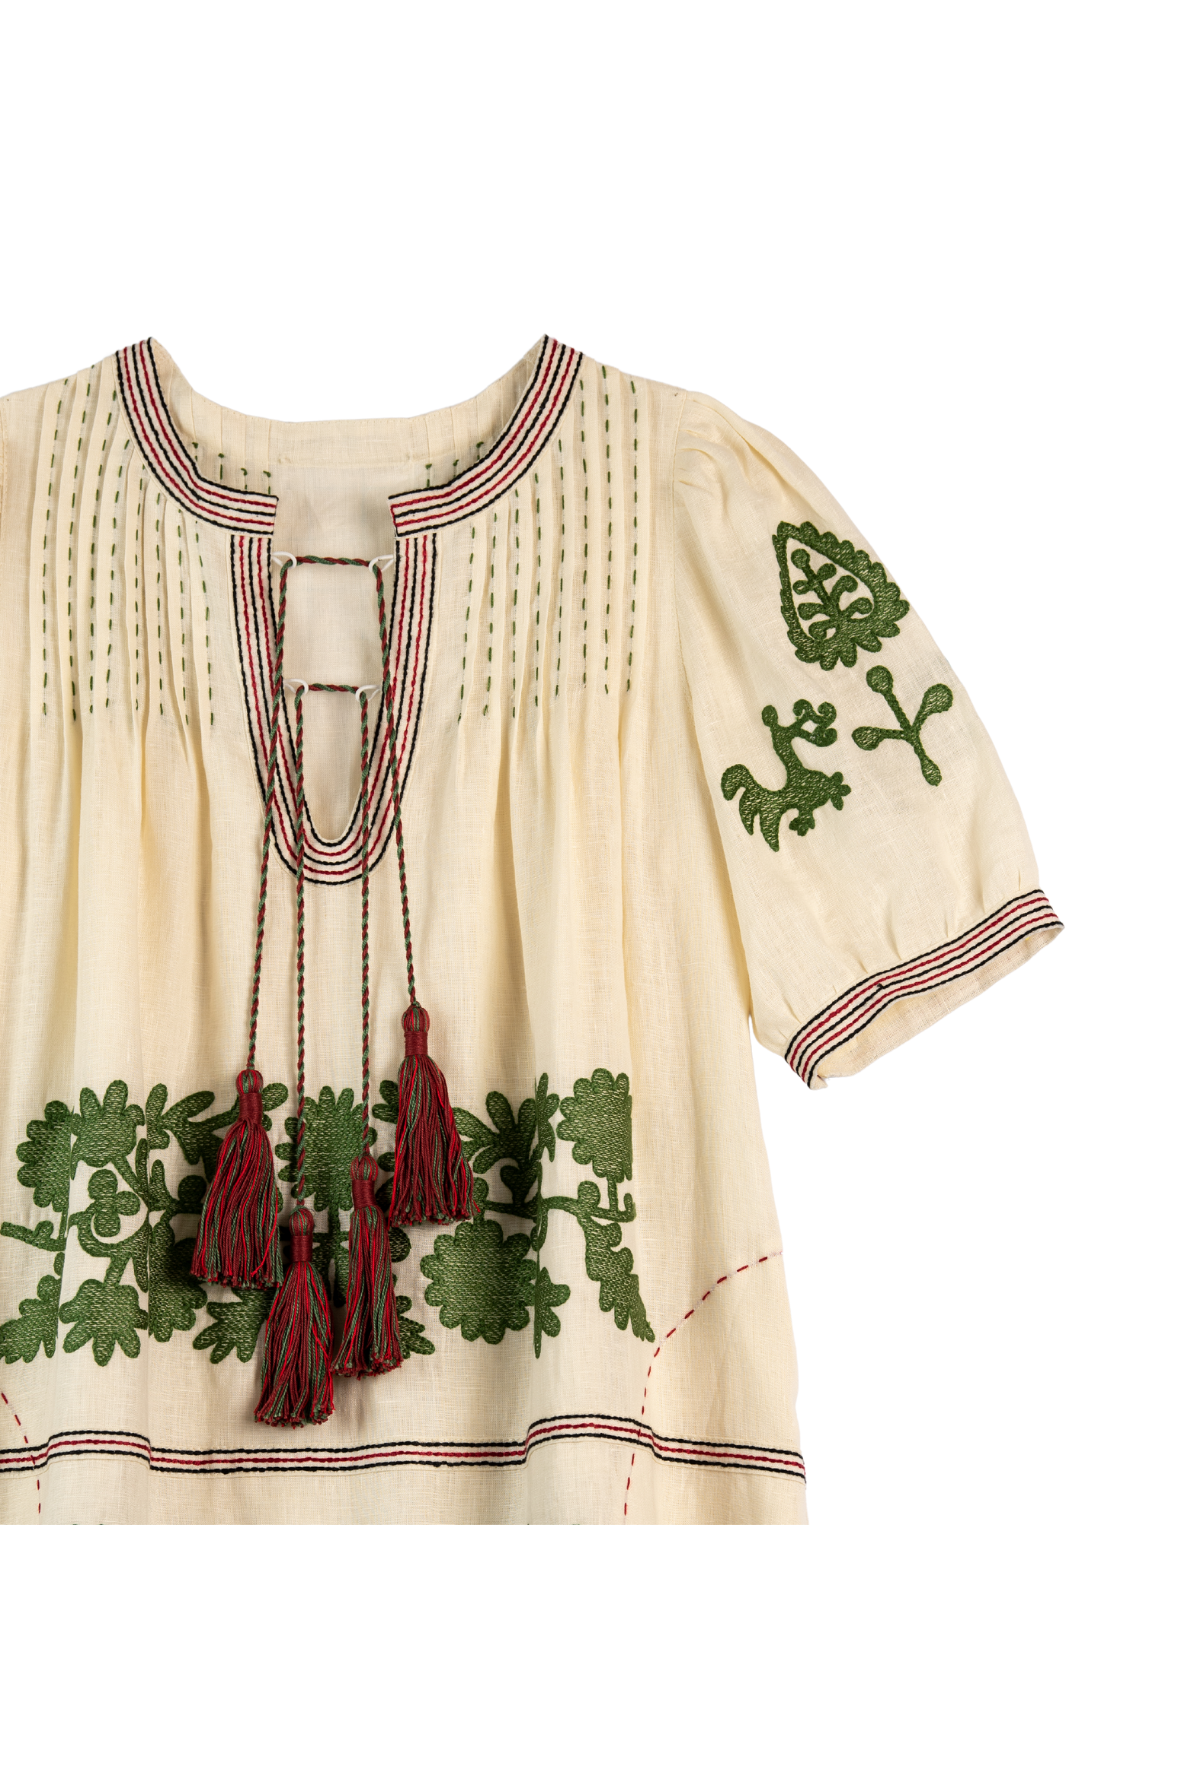 Natalia Ukrainian Embroidered Maxi Dress - Ivory, Olive